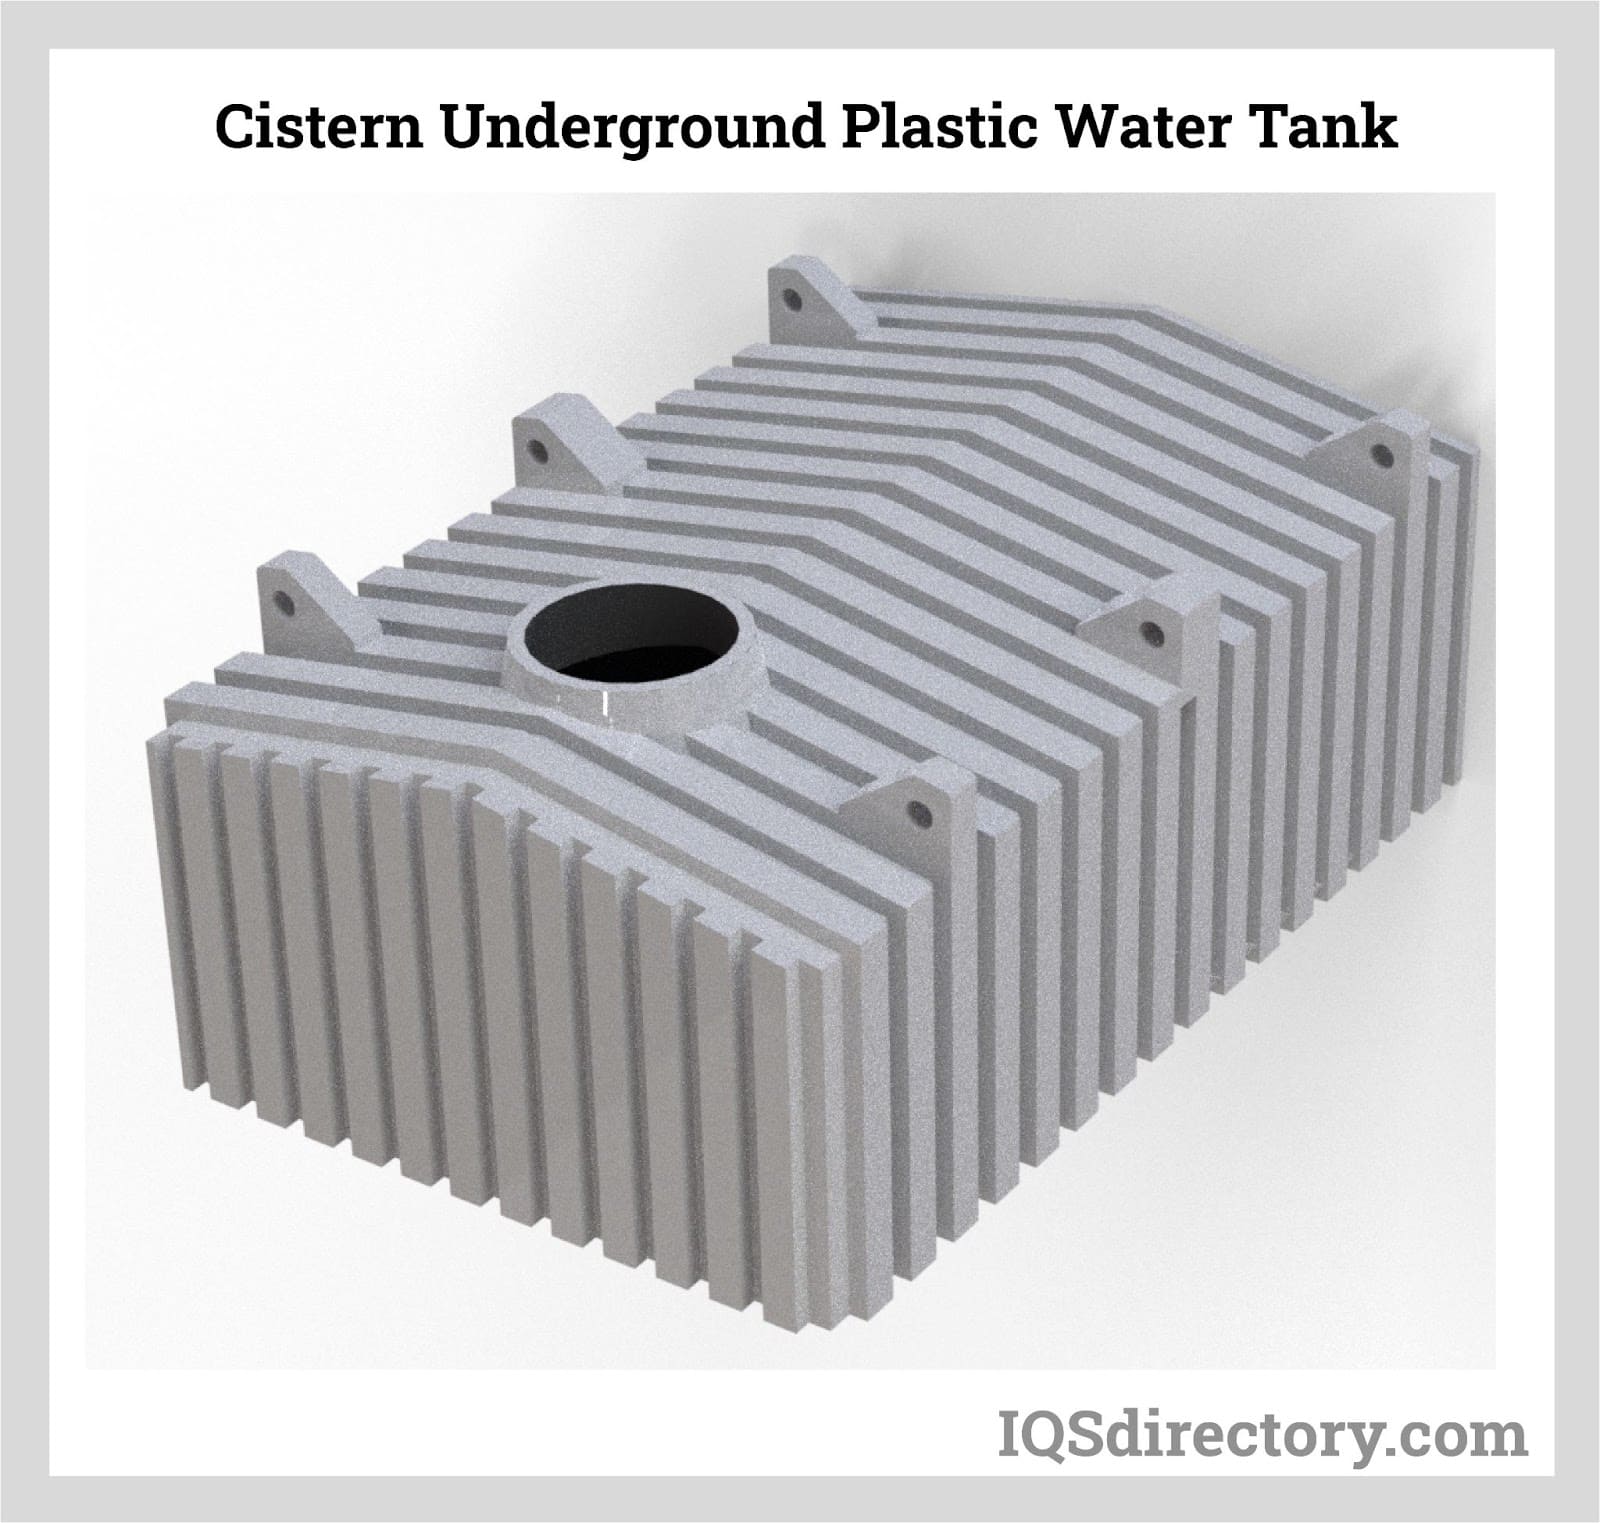 Cistern Underground Plastic Water Tank